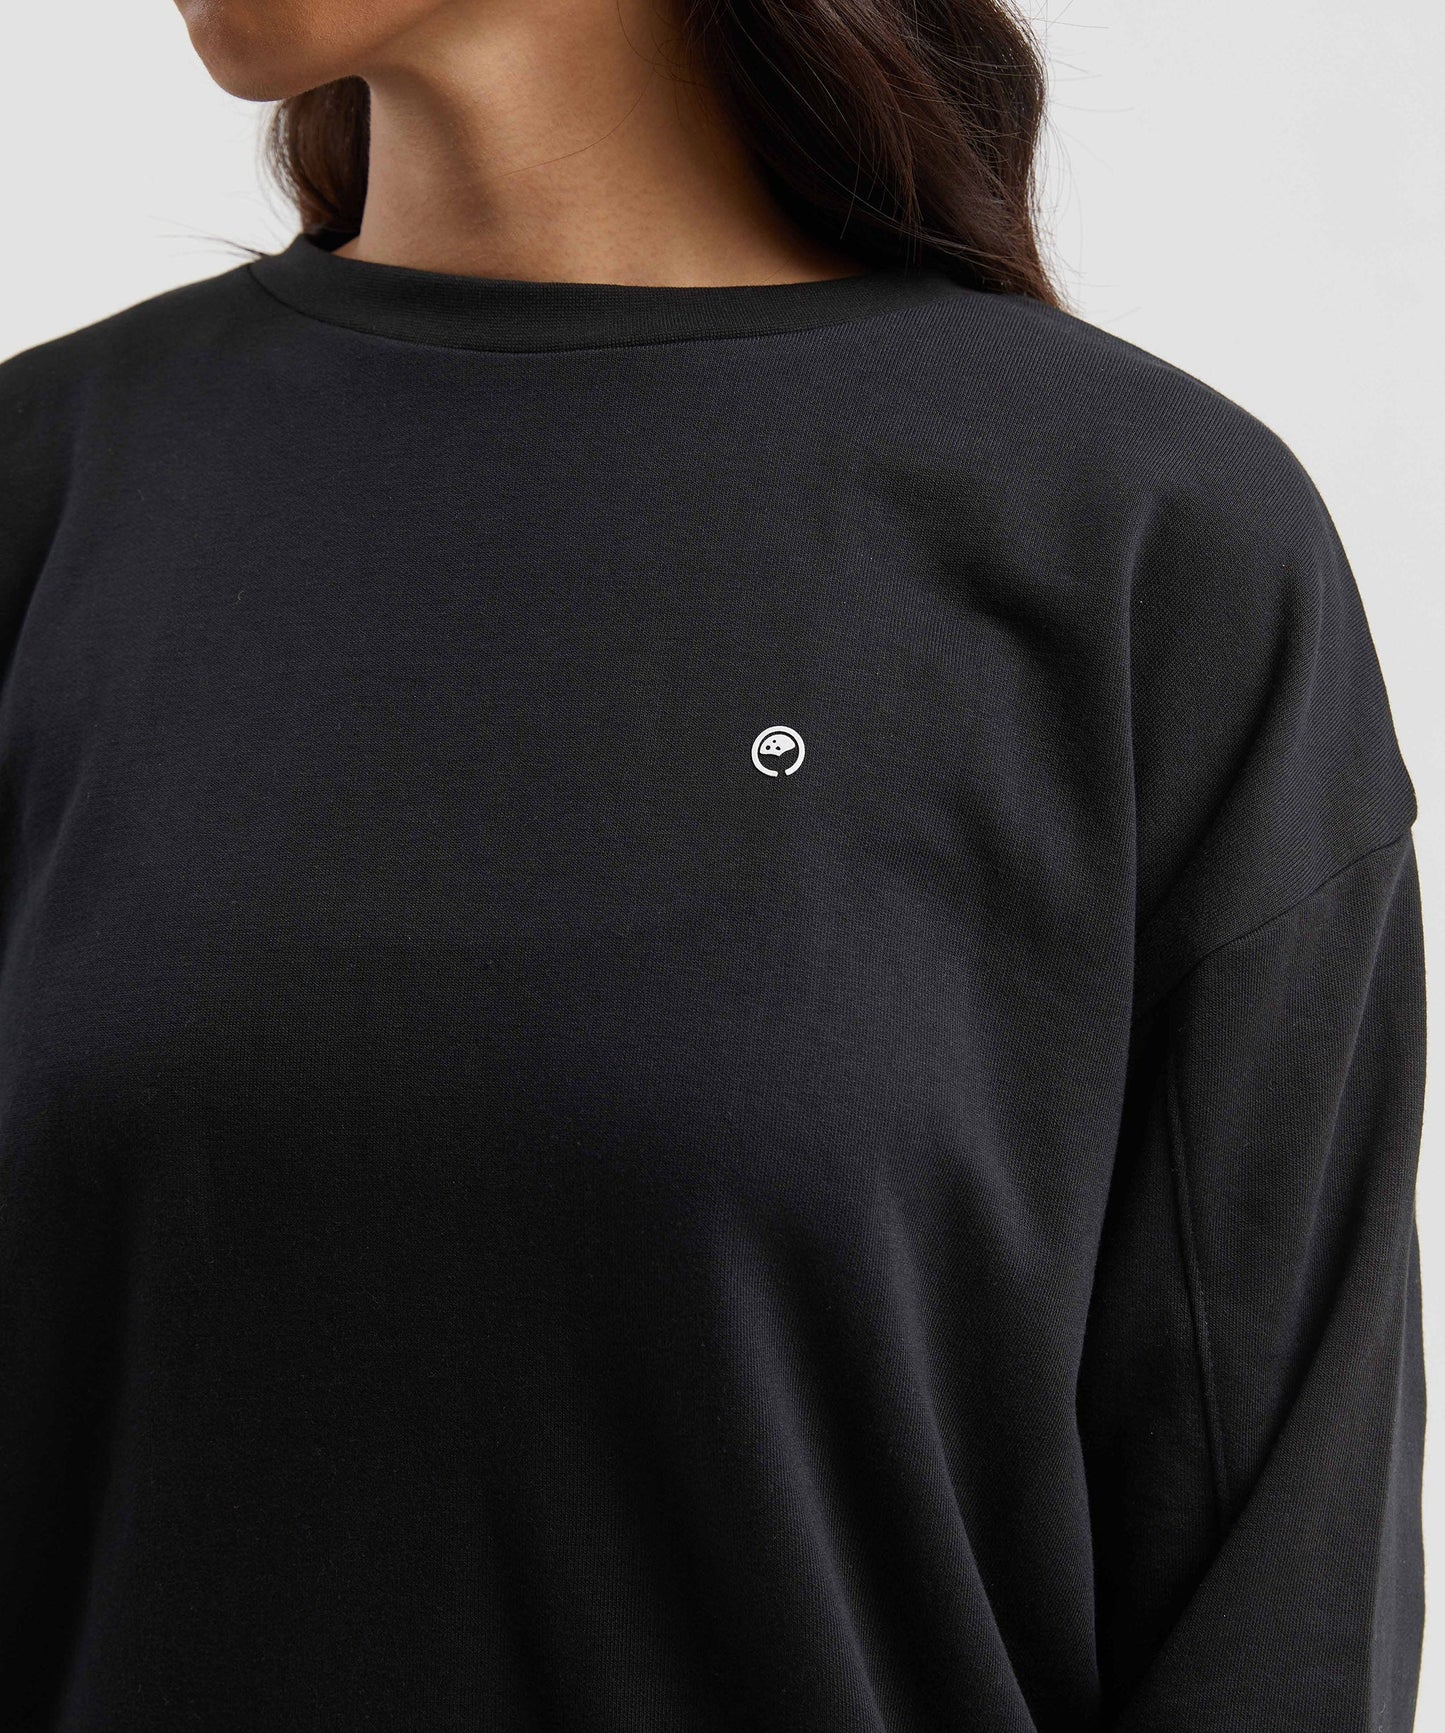 Lotus Sweatshirt for Women - Black